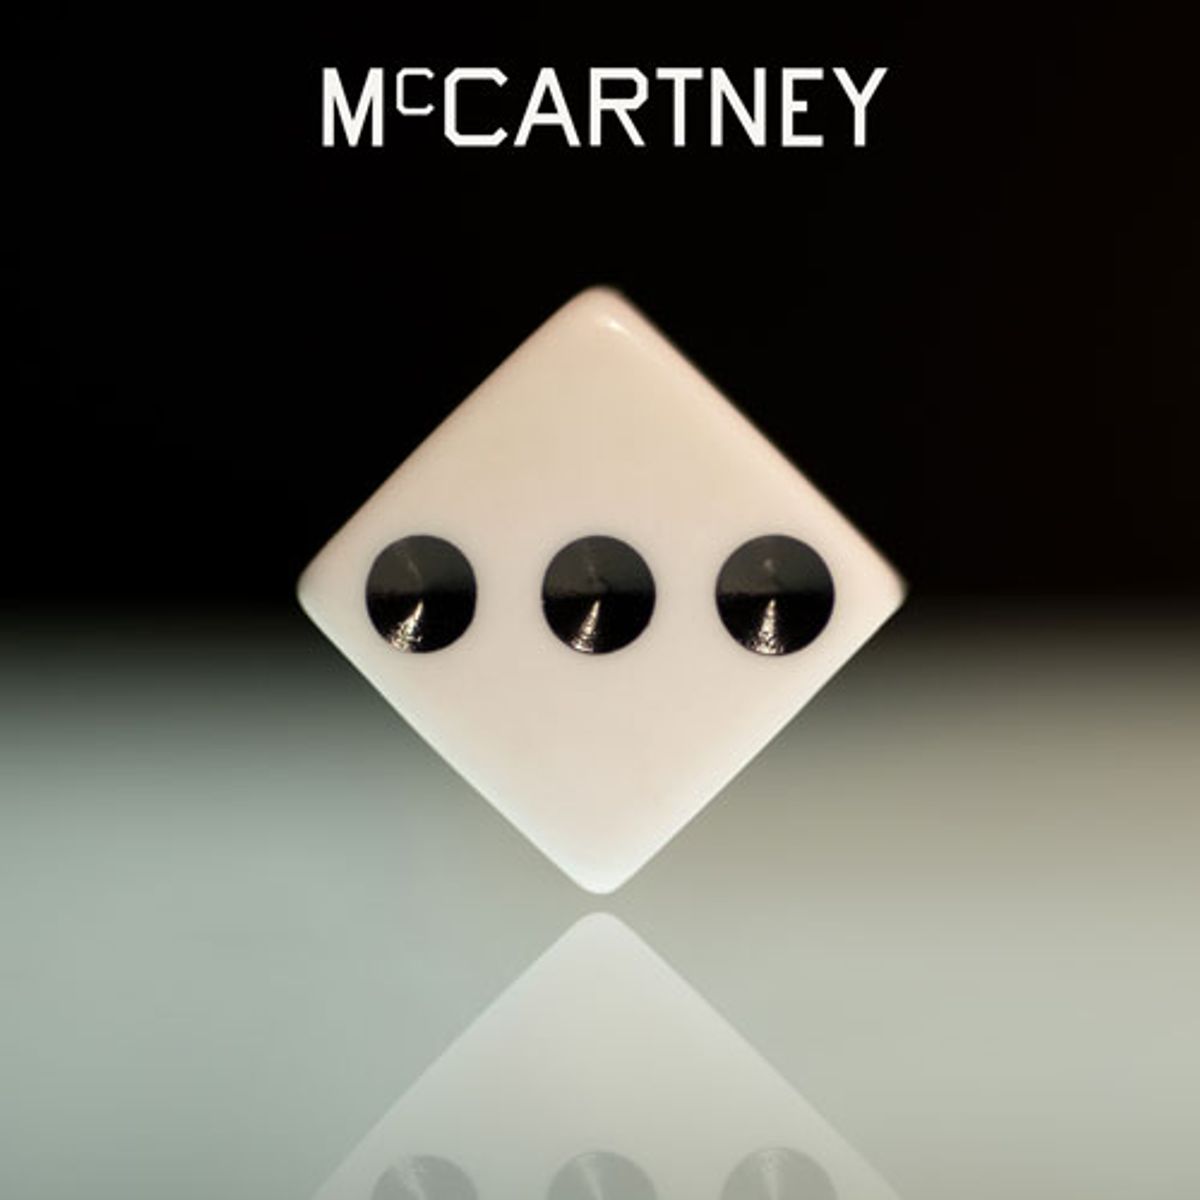 Paul McCartney Announces McCartney III